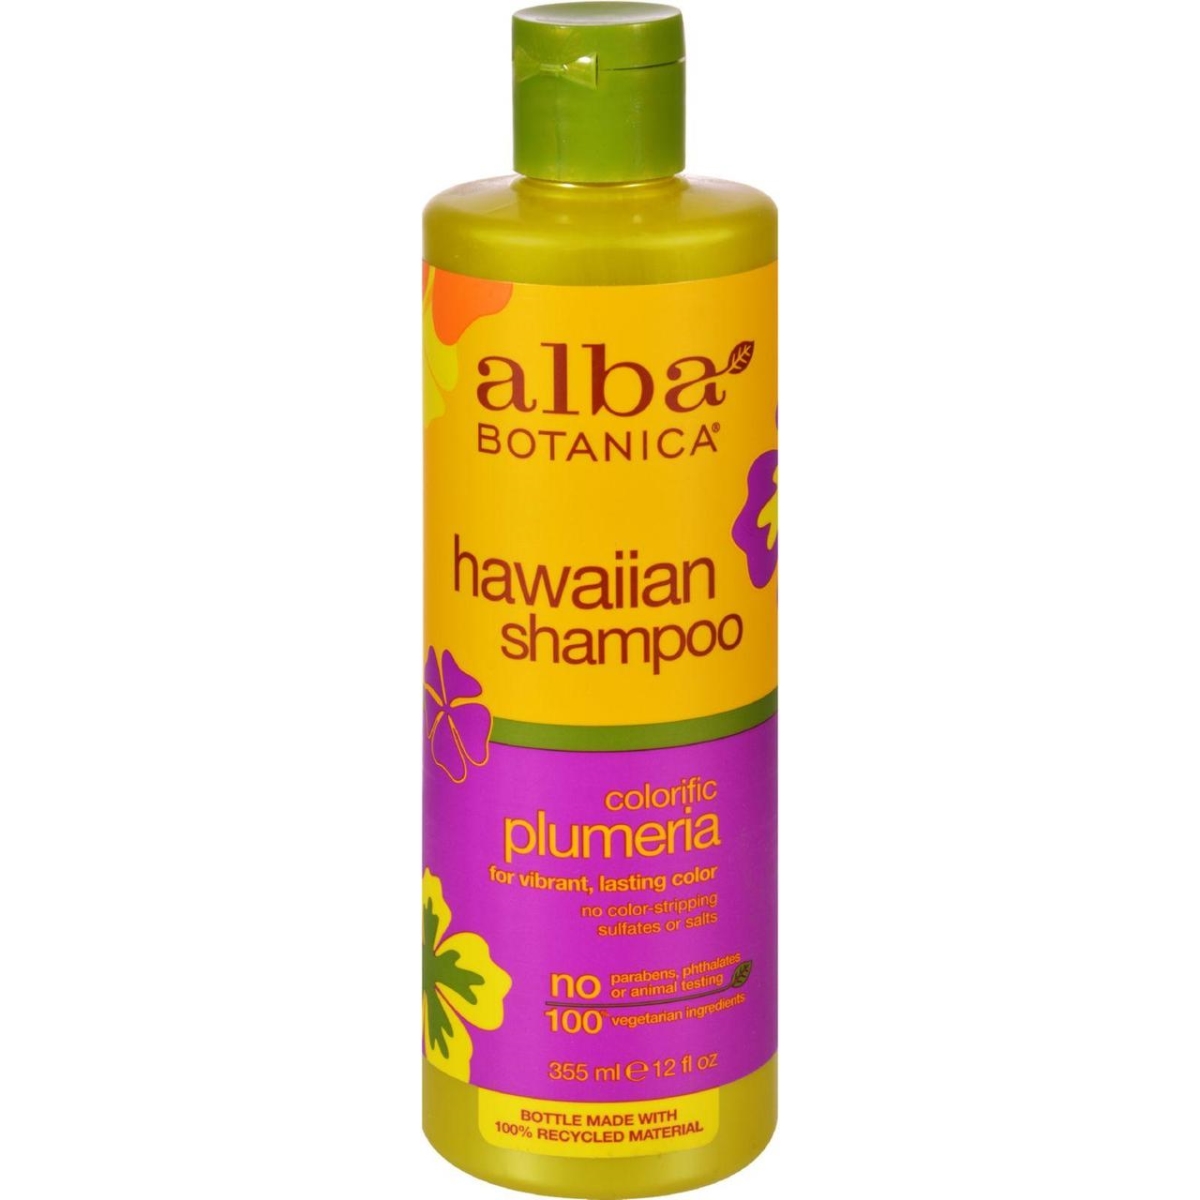 Hg0596437 12 Fl Oz Hawaiian Natural Shampoo, Colorific Plumeria